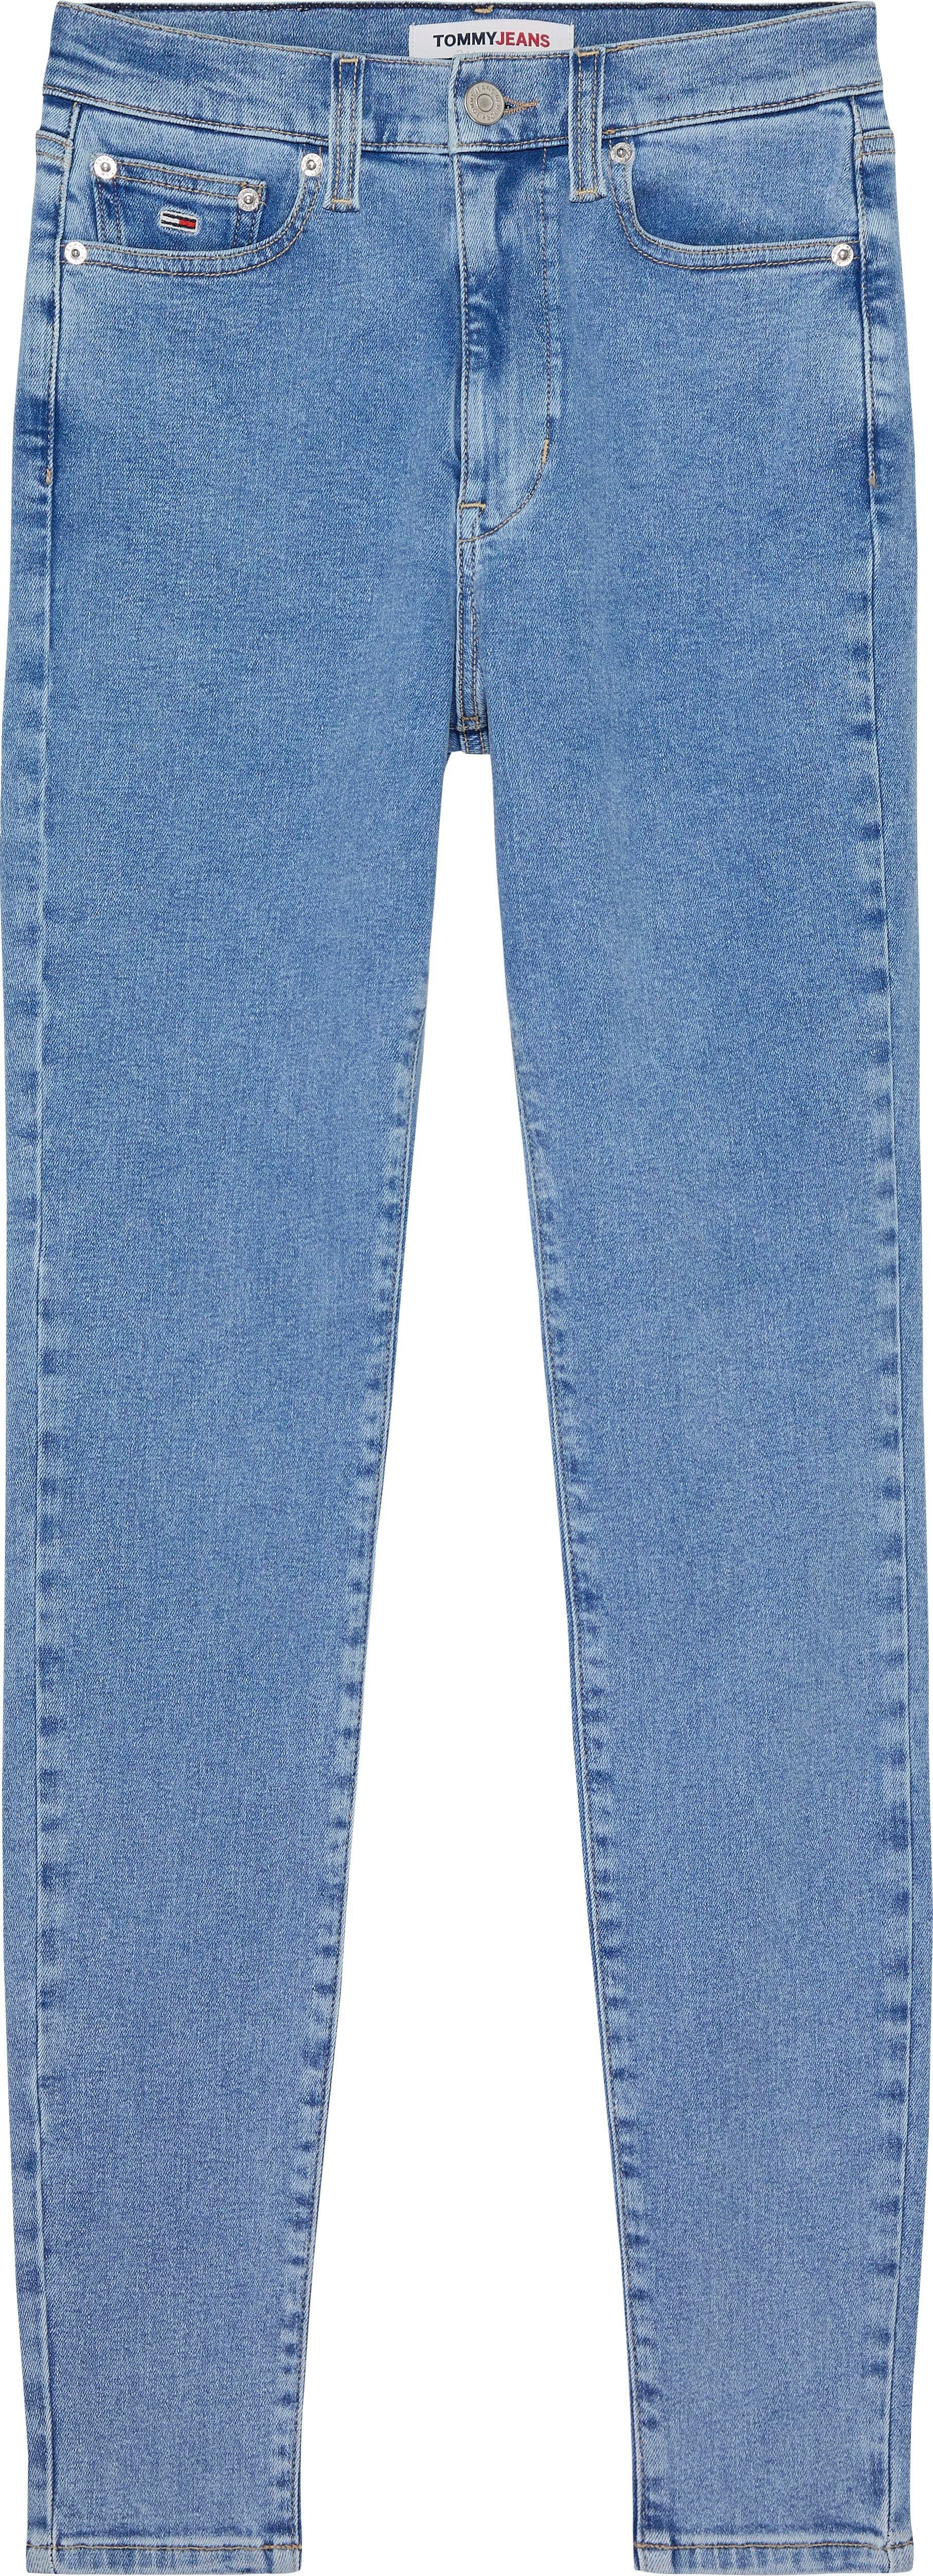 Tommy Jeans Skinny-fit-Jeans Jeans SYLVIA HR SSKN CG4 mit Logobadge und Labelflags light denim1